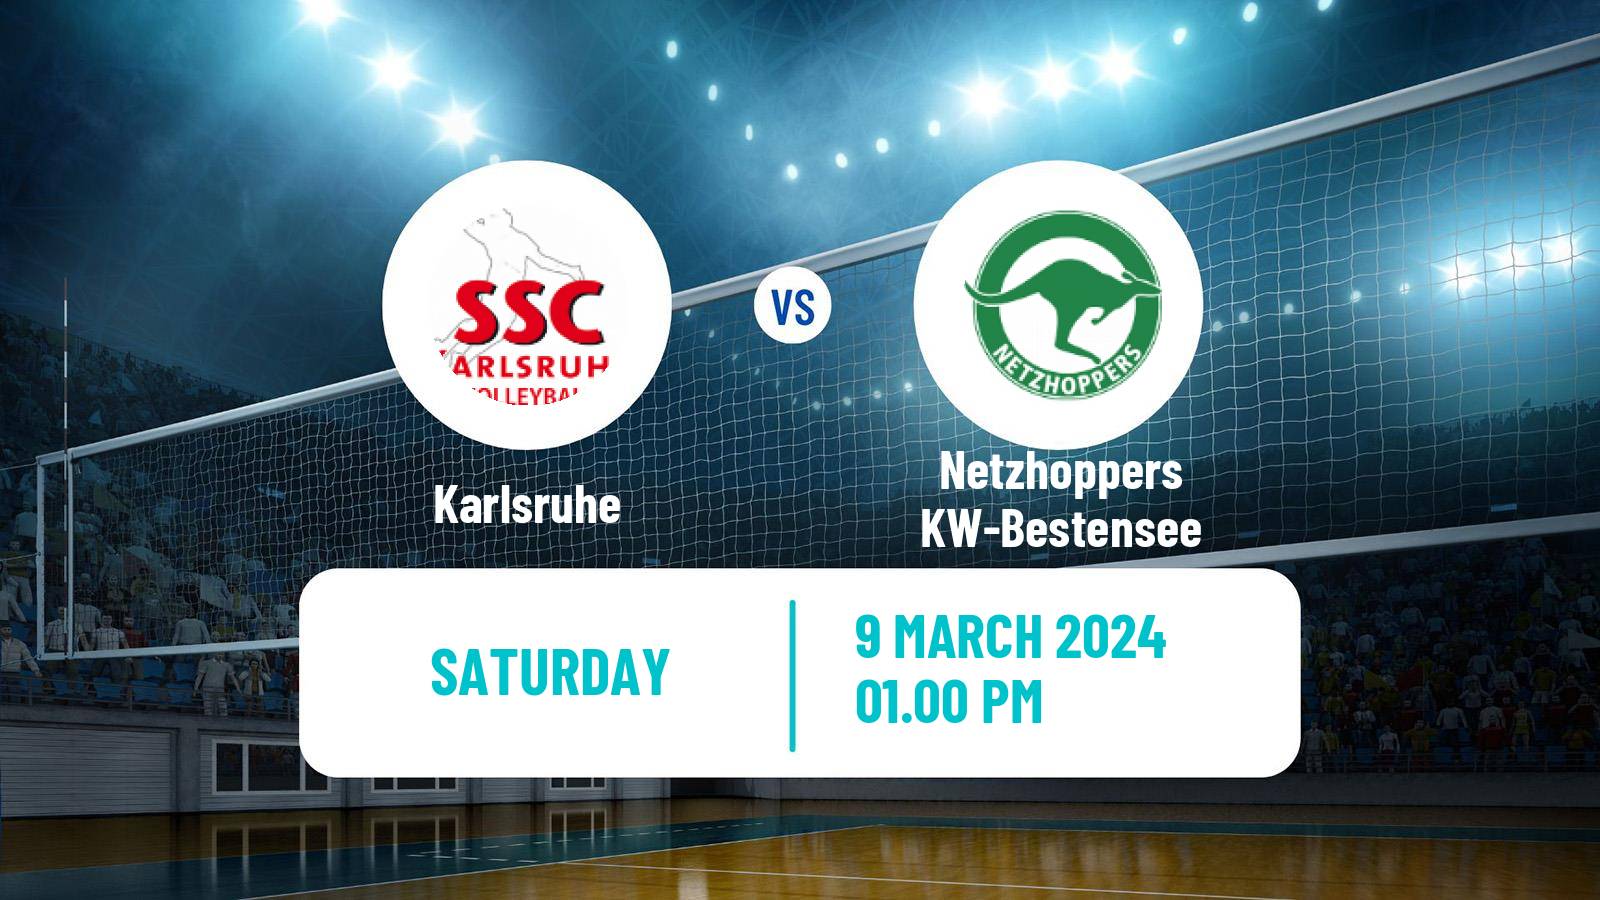 Volleyball German Bundesliga Volleyball Karlsruhe - Netzhoppers KW-Bestensee